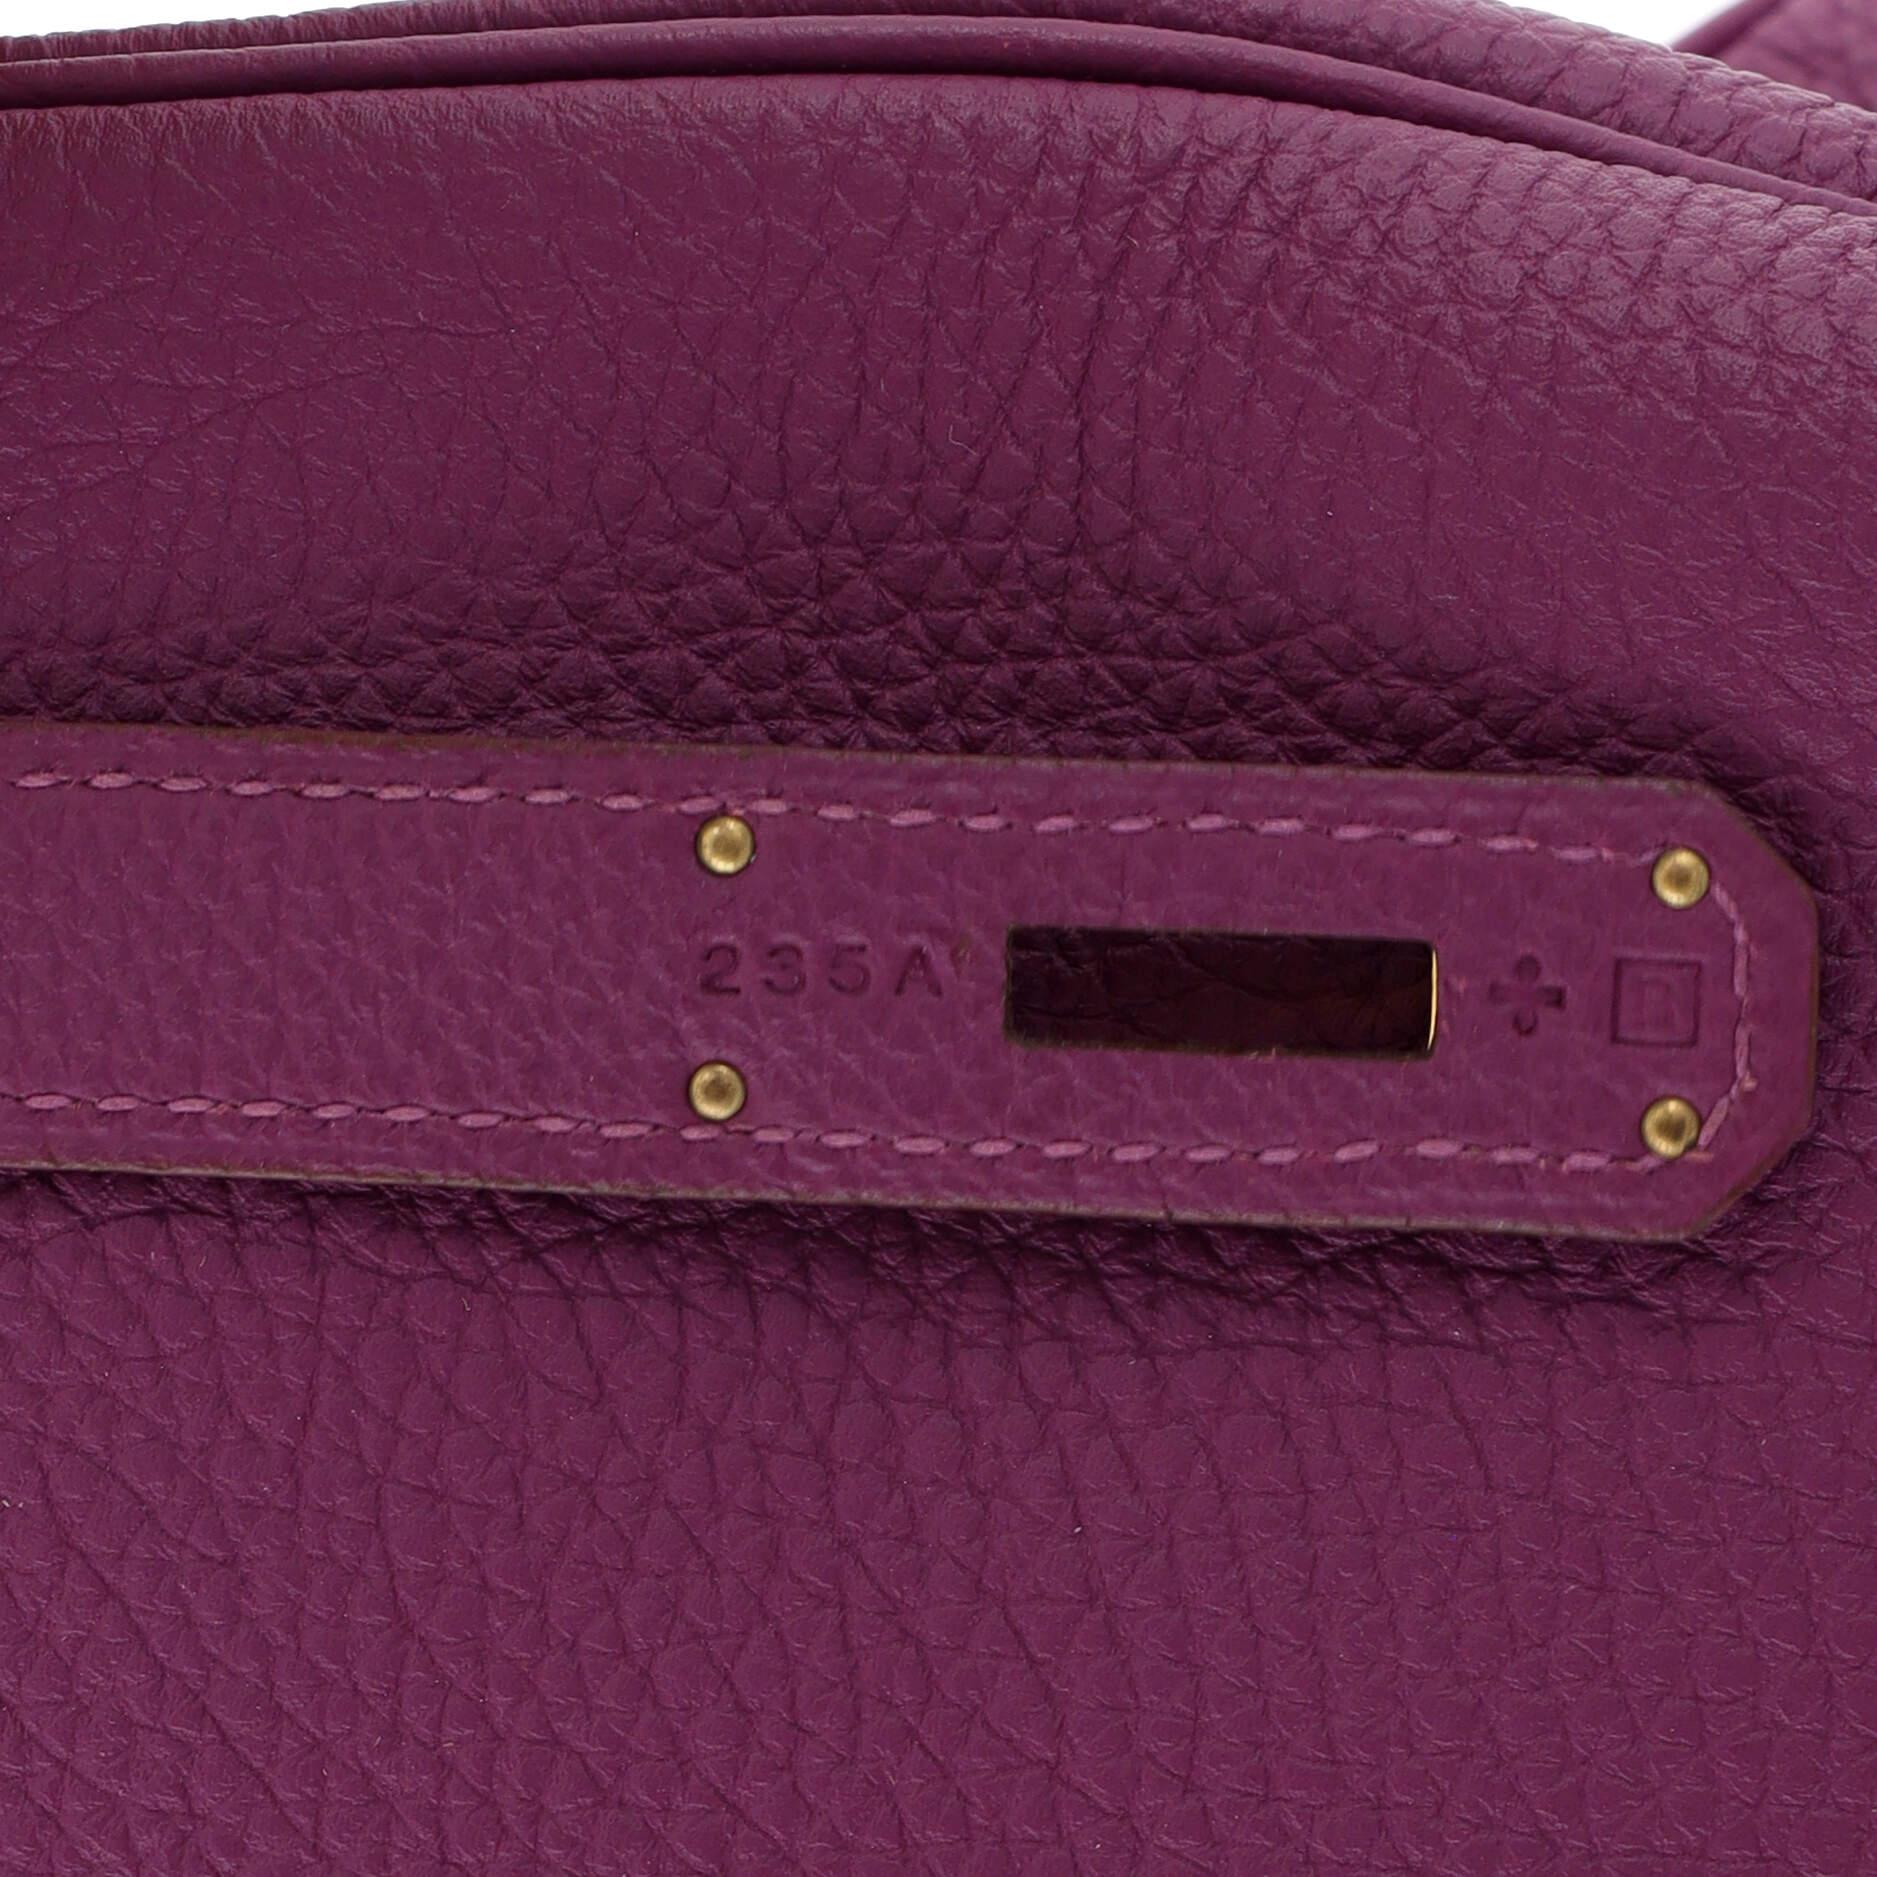 Hermes Kelly Handbag Anemone Togo with Gold Hardware 32 4